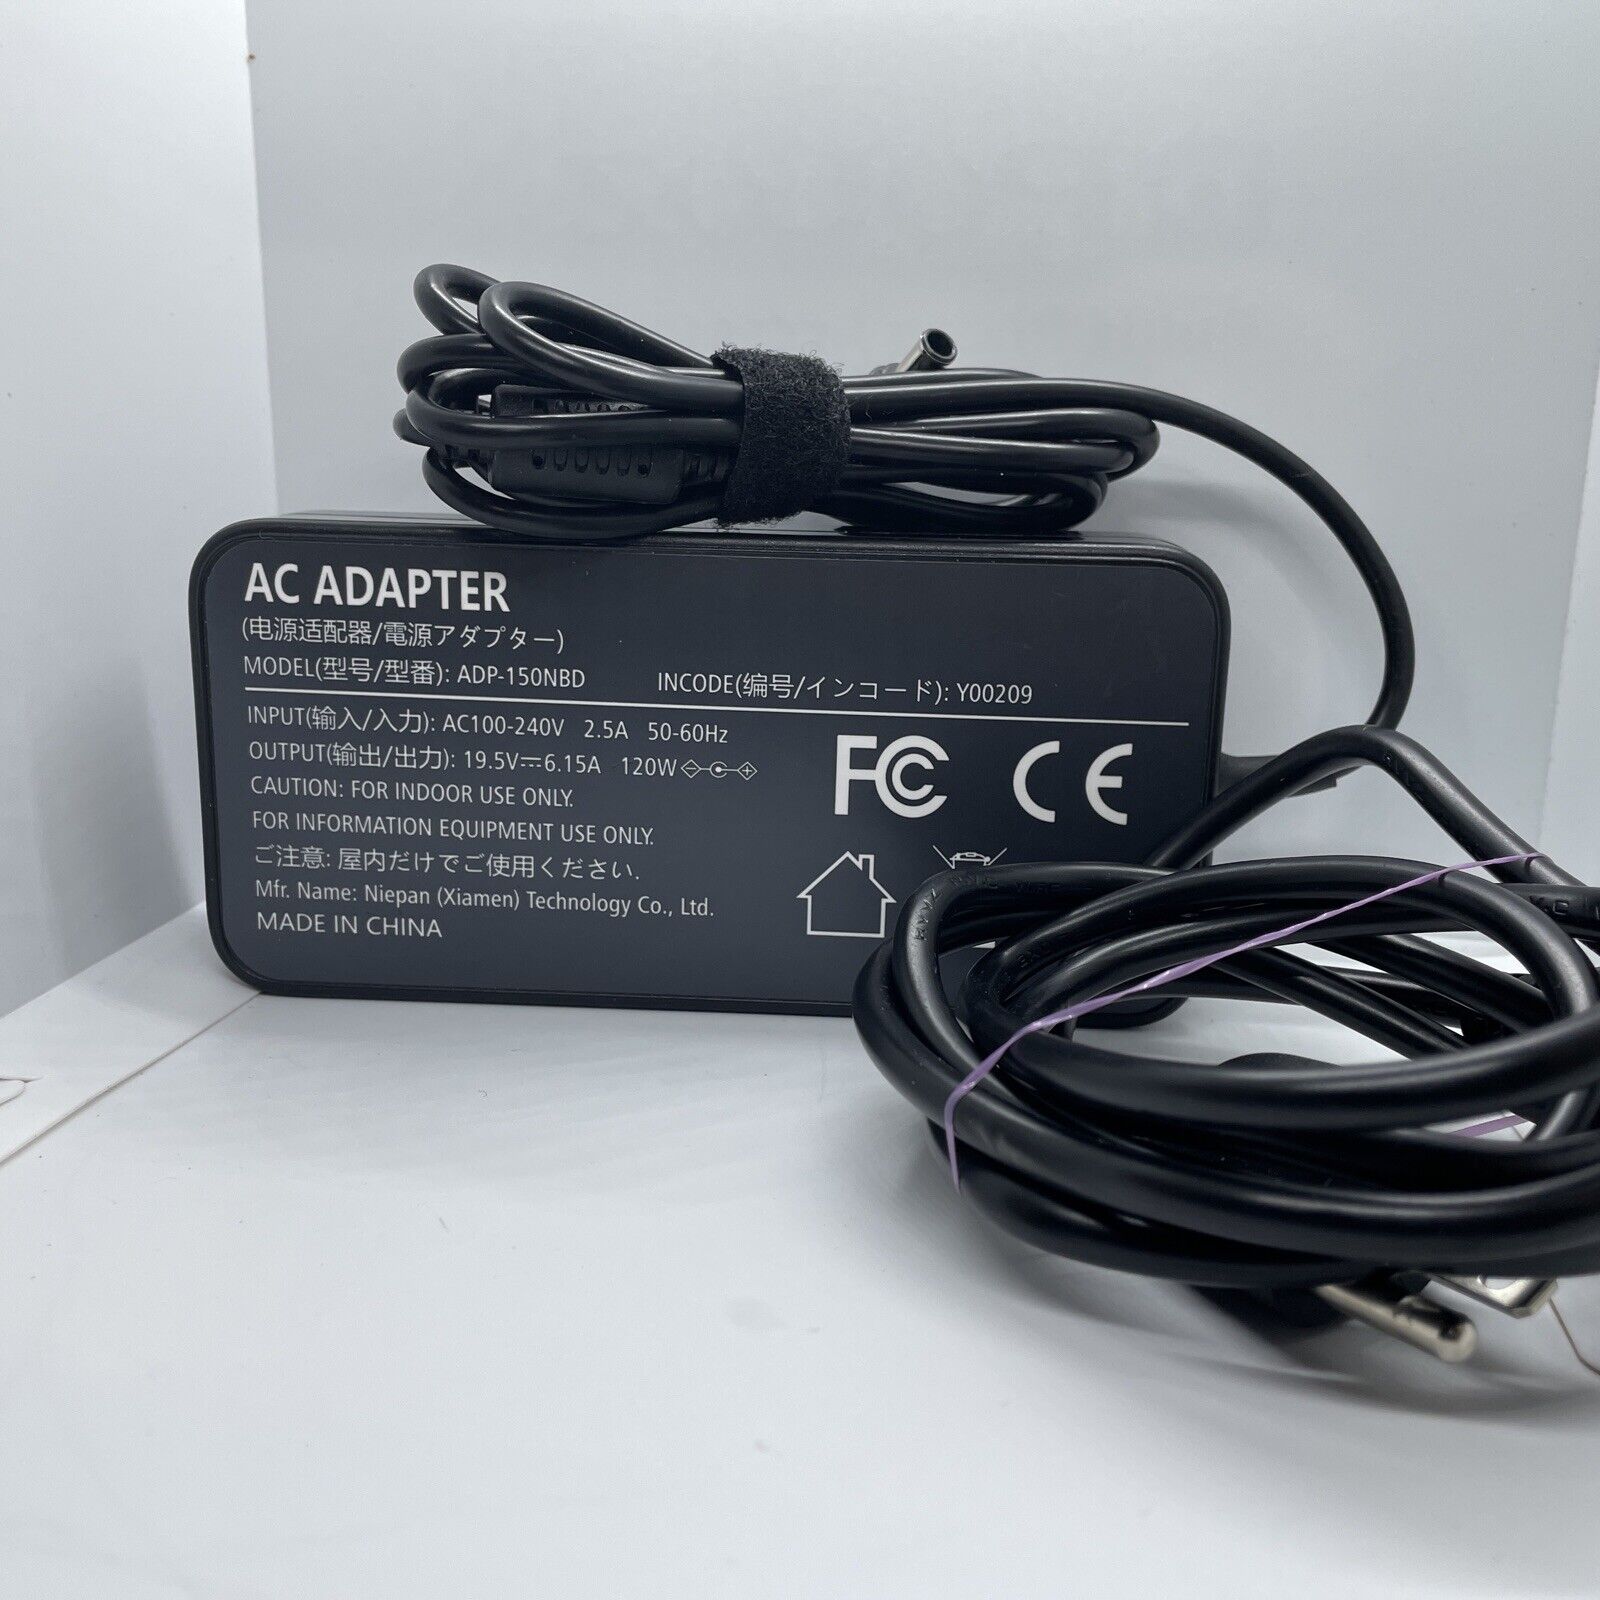 AC Adapter for  Asus ROG ADP-150NBD G750JZ,G751JT,G55VW,G60VX ,G60JX, G71GX